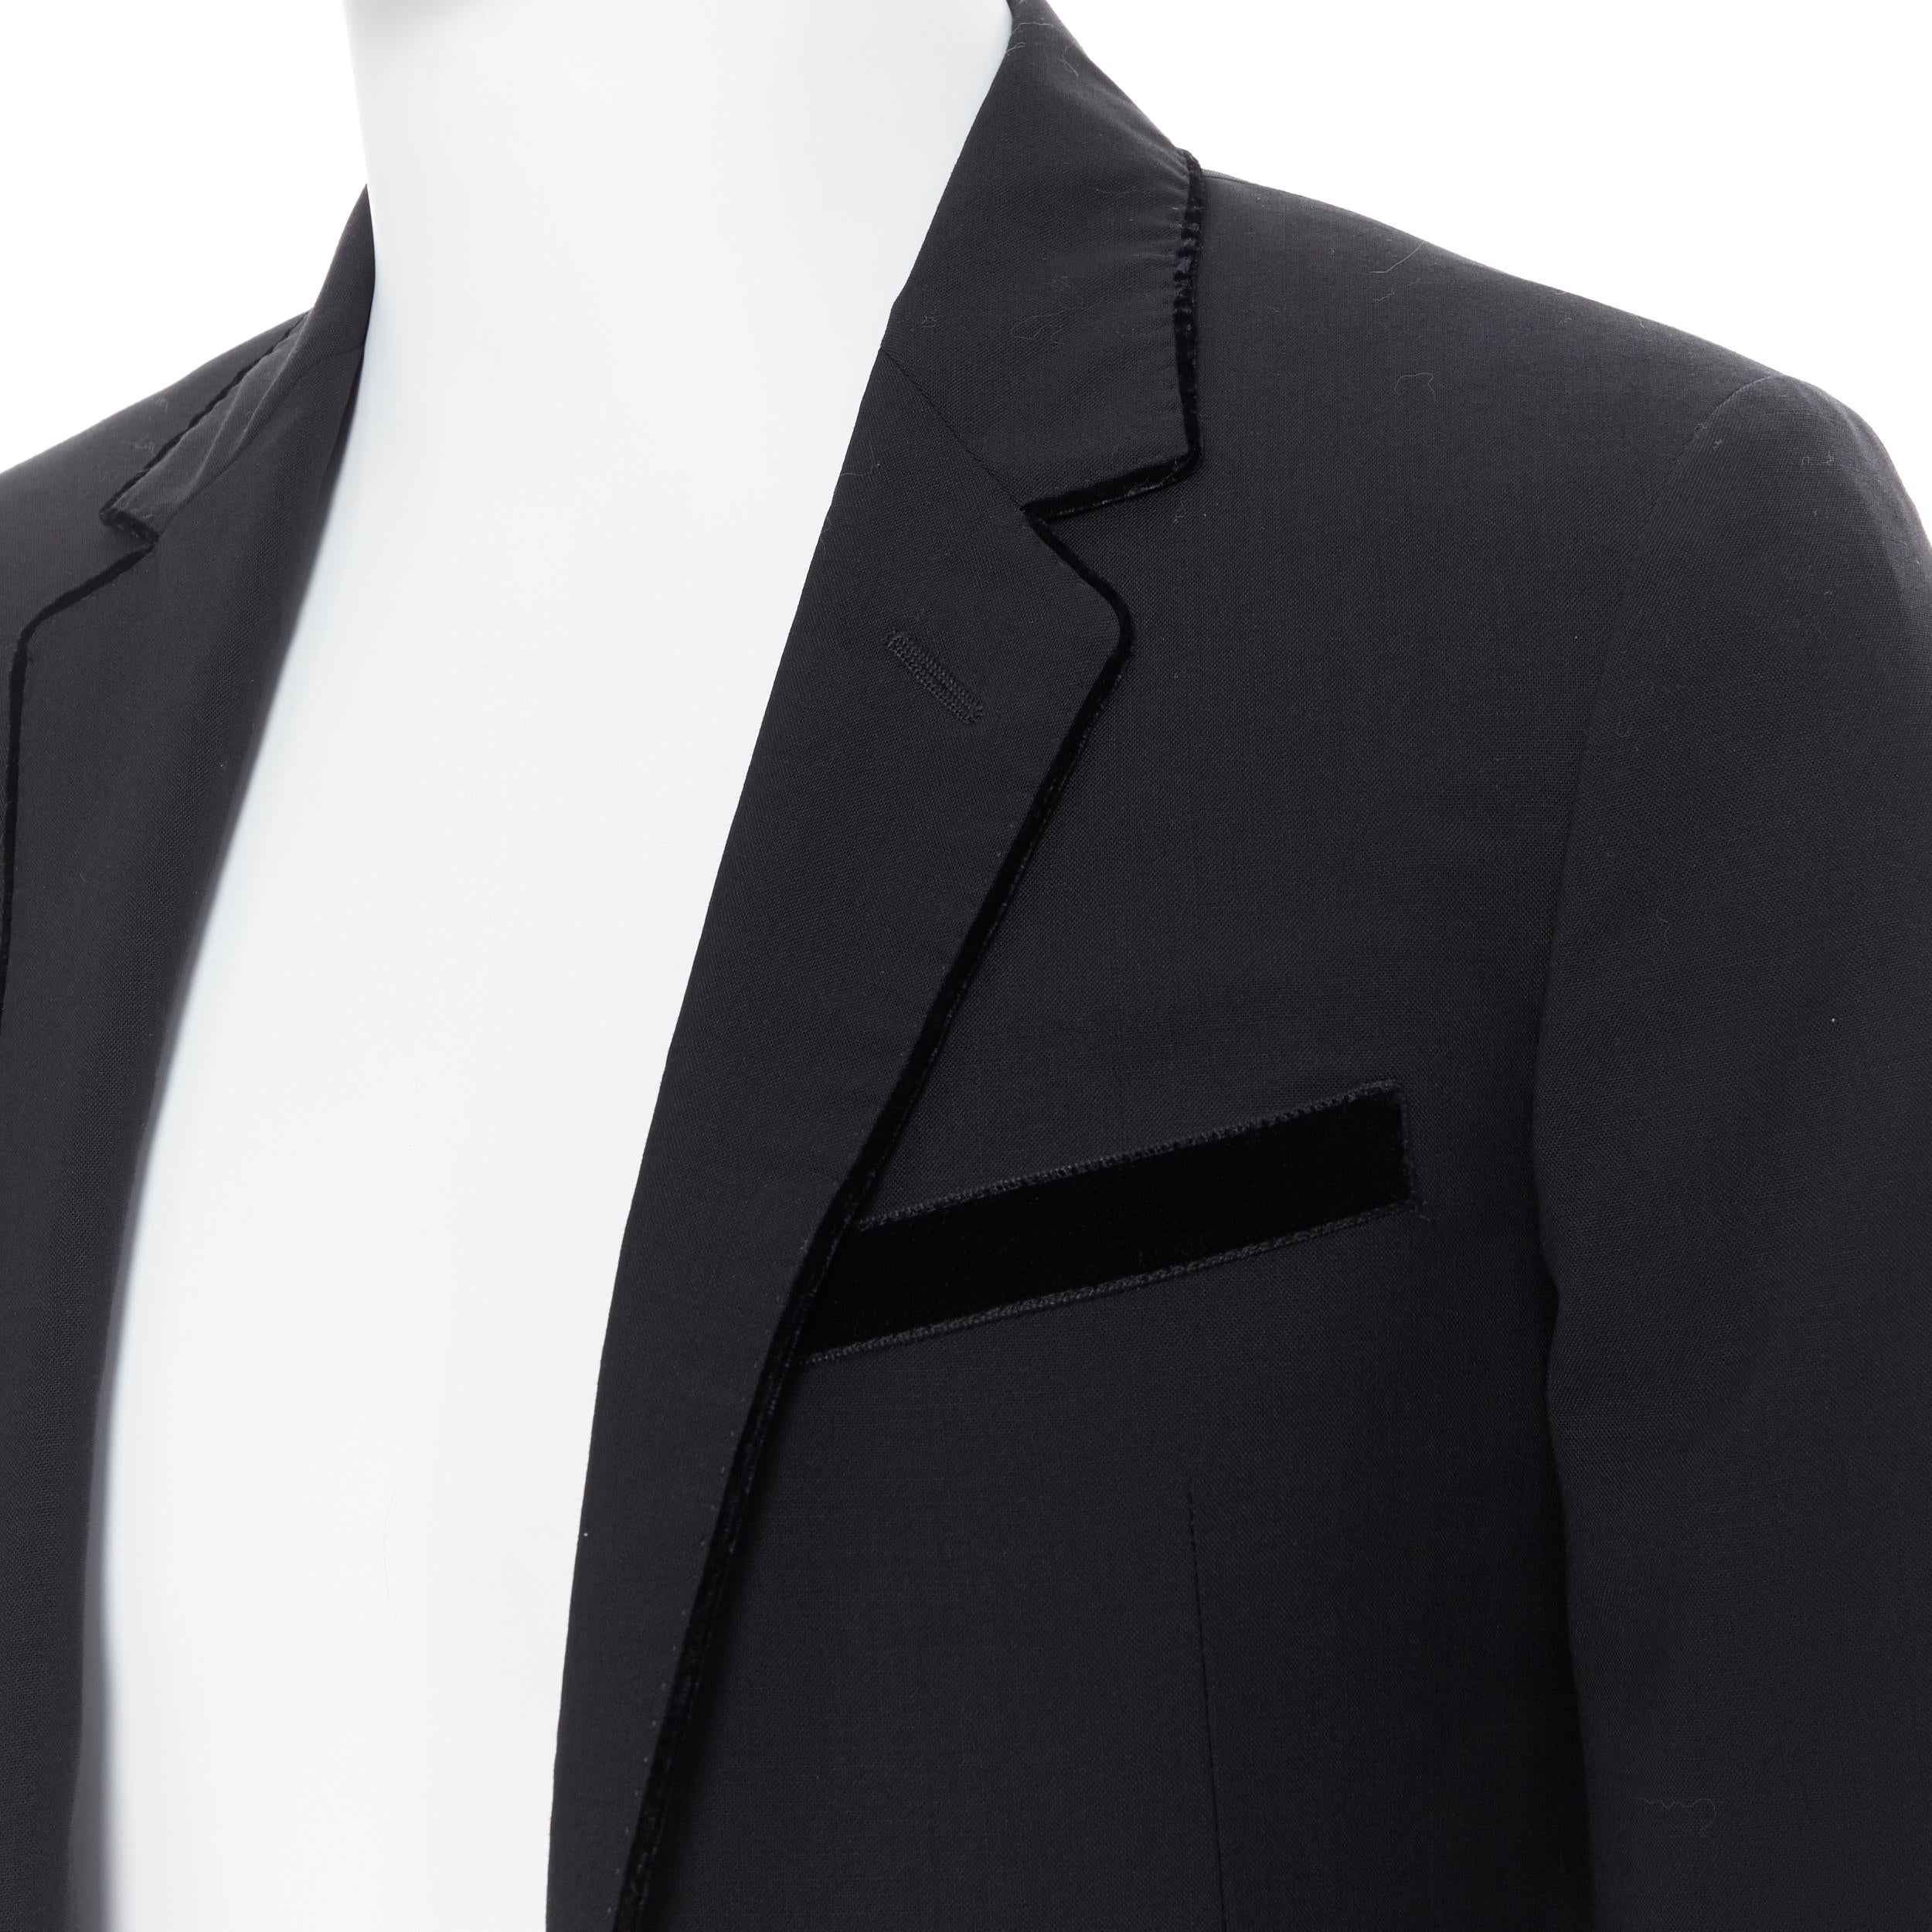 LANVIN ALBER ELBAZ wool blend black velvet peak lapel formal blazer jacket FR44
Brand: Lanvin
Designer: Alber Elbaz
Model Name / Style: Blazer 
Material: Wool blend
Color: Black
Pattern: Solid
Closure: Button
Extra Detail: Velvet trimming along